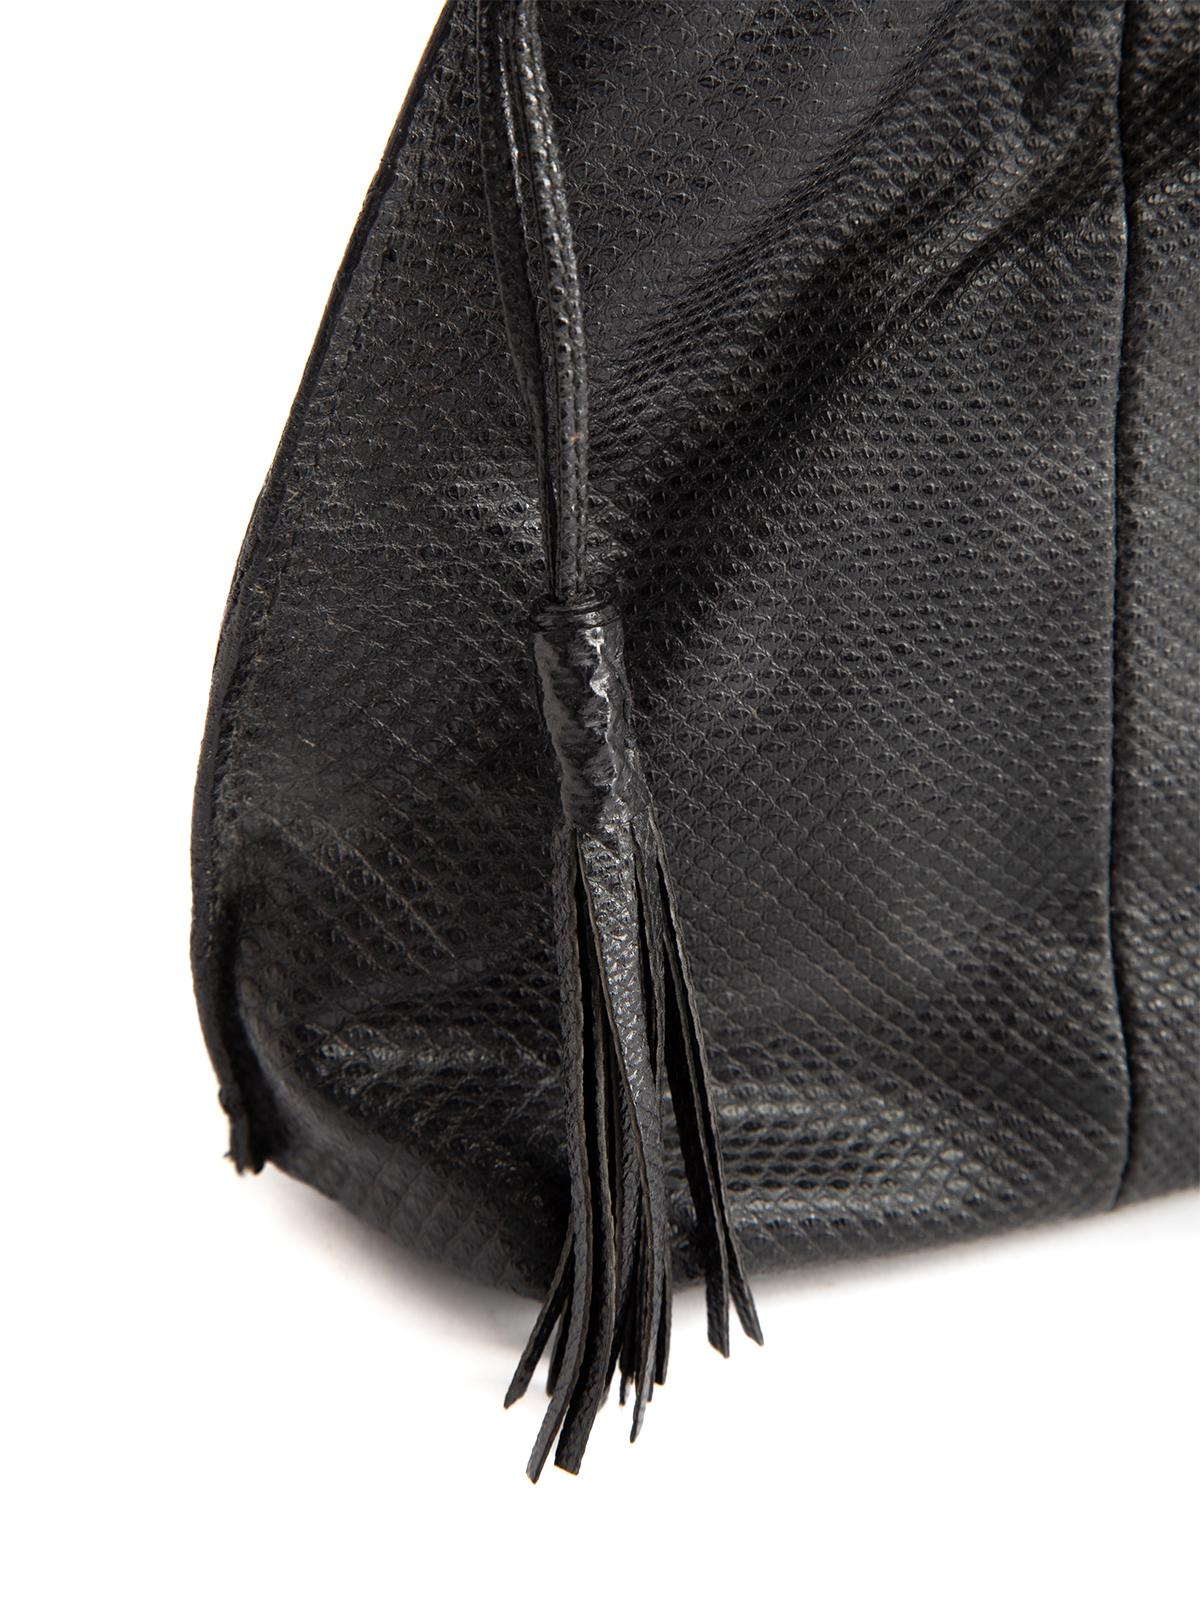 Pre-Loved Gucci Women's Embossed Leather Shoulder Bag 4